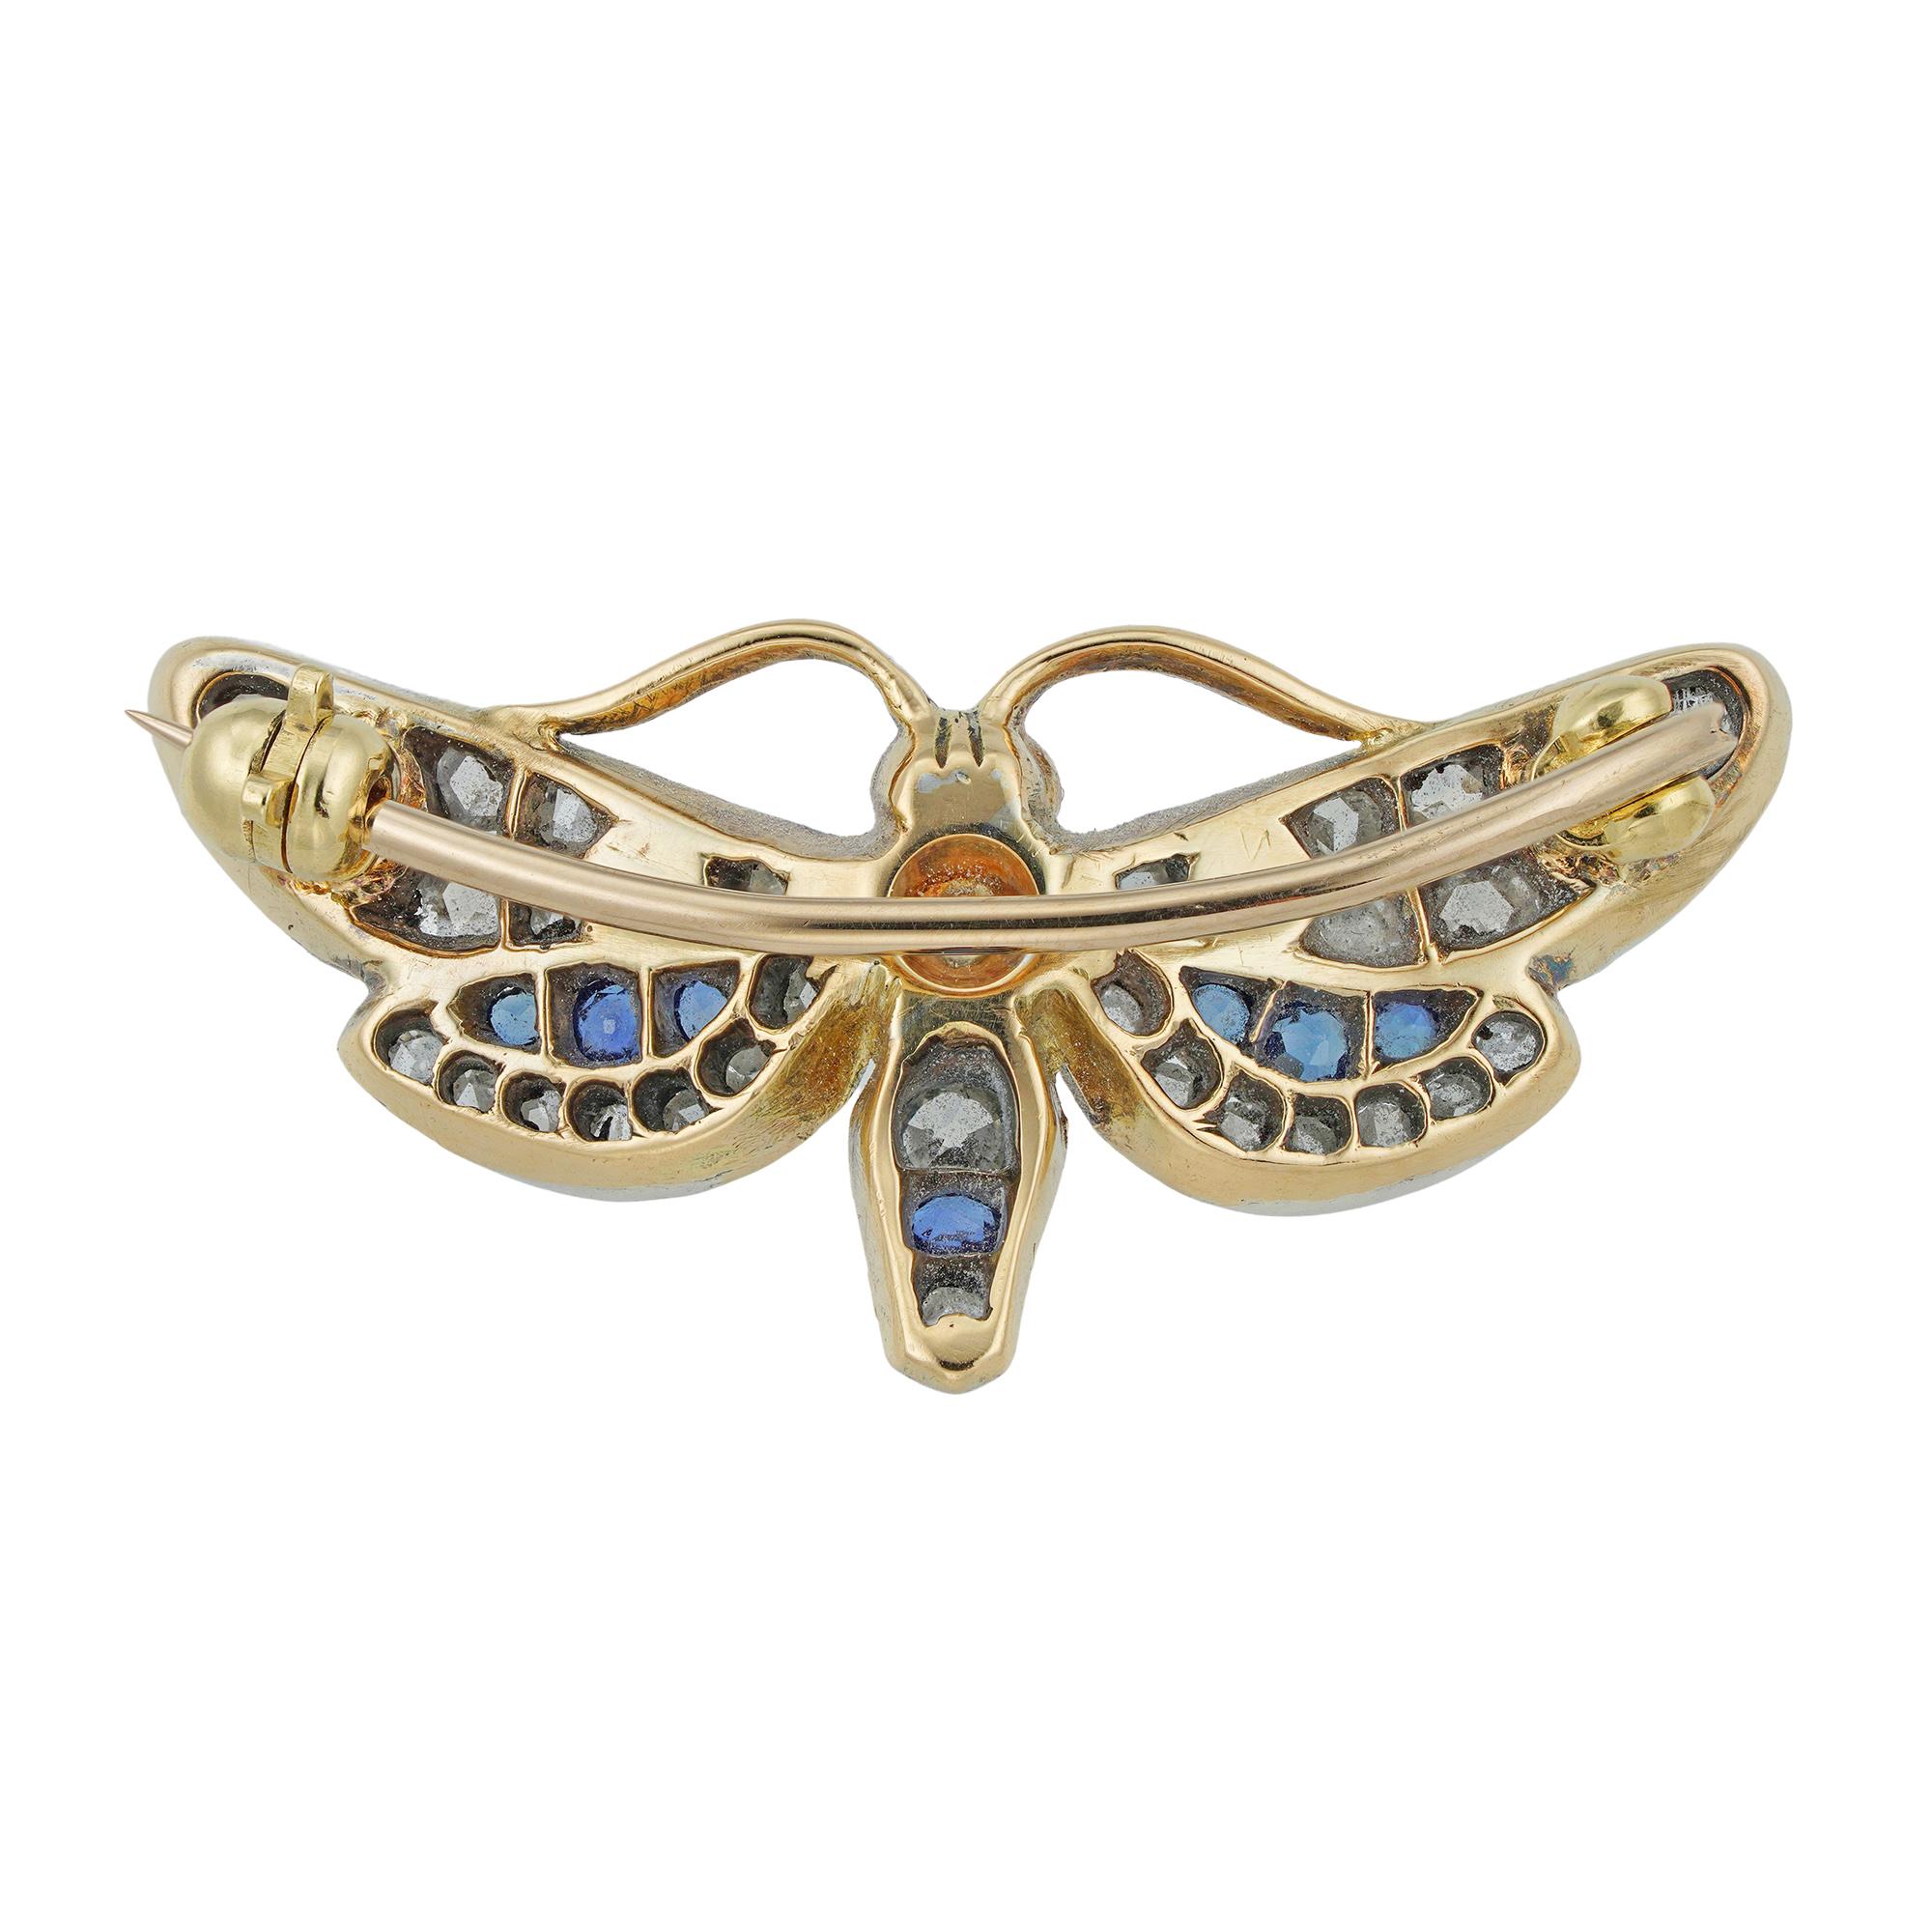 Brilliant Cut Late Victorian Multigem Butterfly Brooch